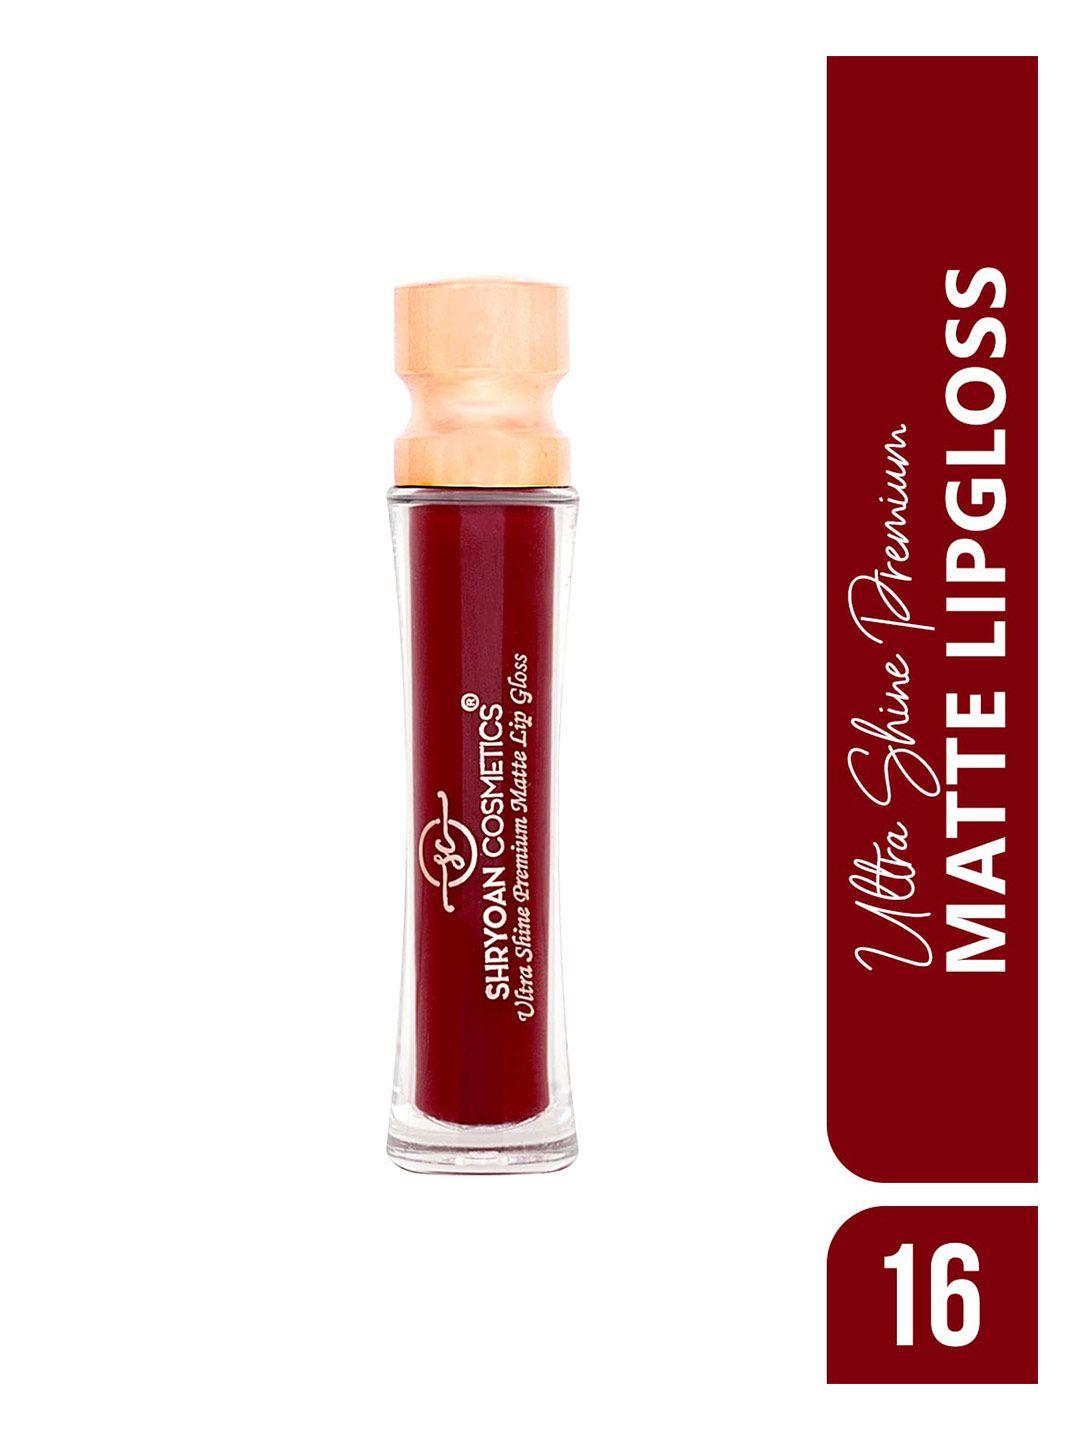 shryoan ultra shine premium matte long lasting lip gloss - burgundy - sh16